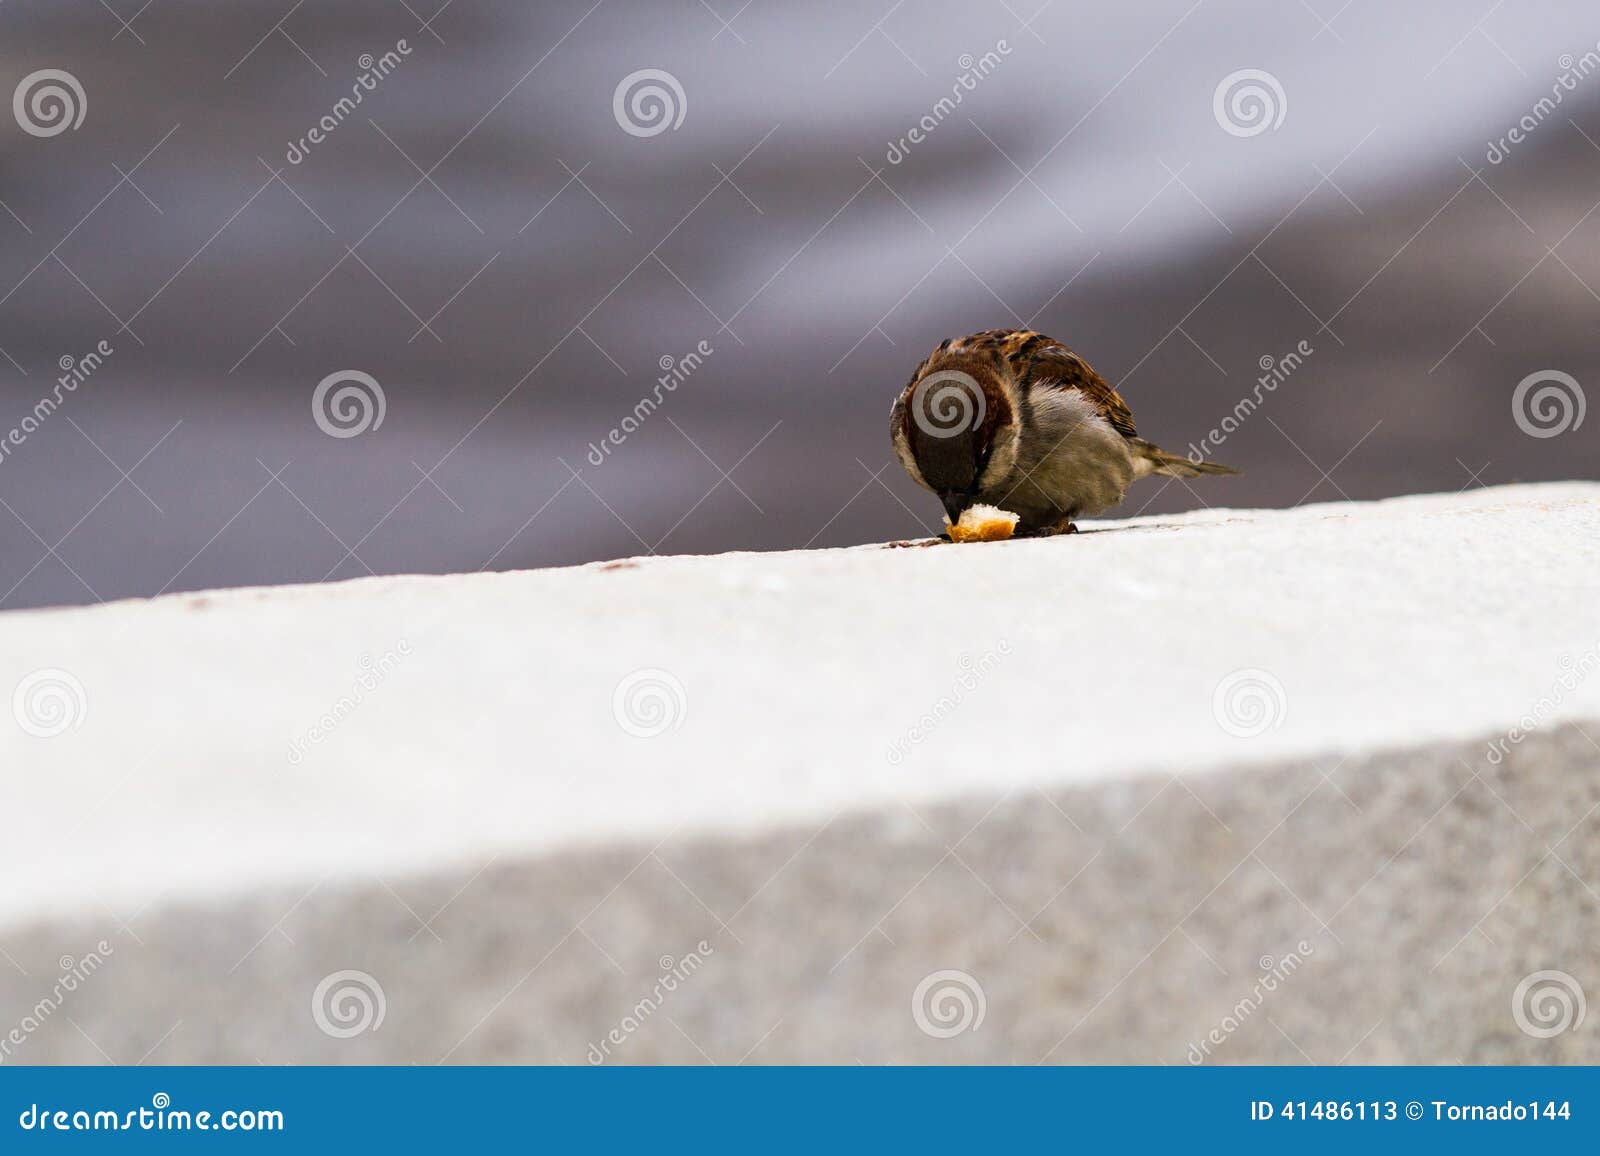 a sparrow pecks a bit of a bread